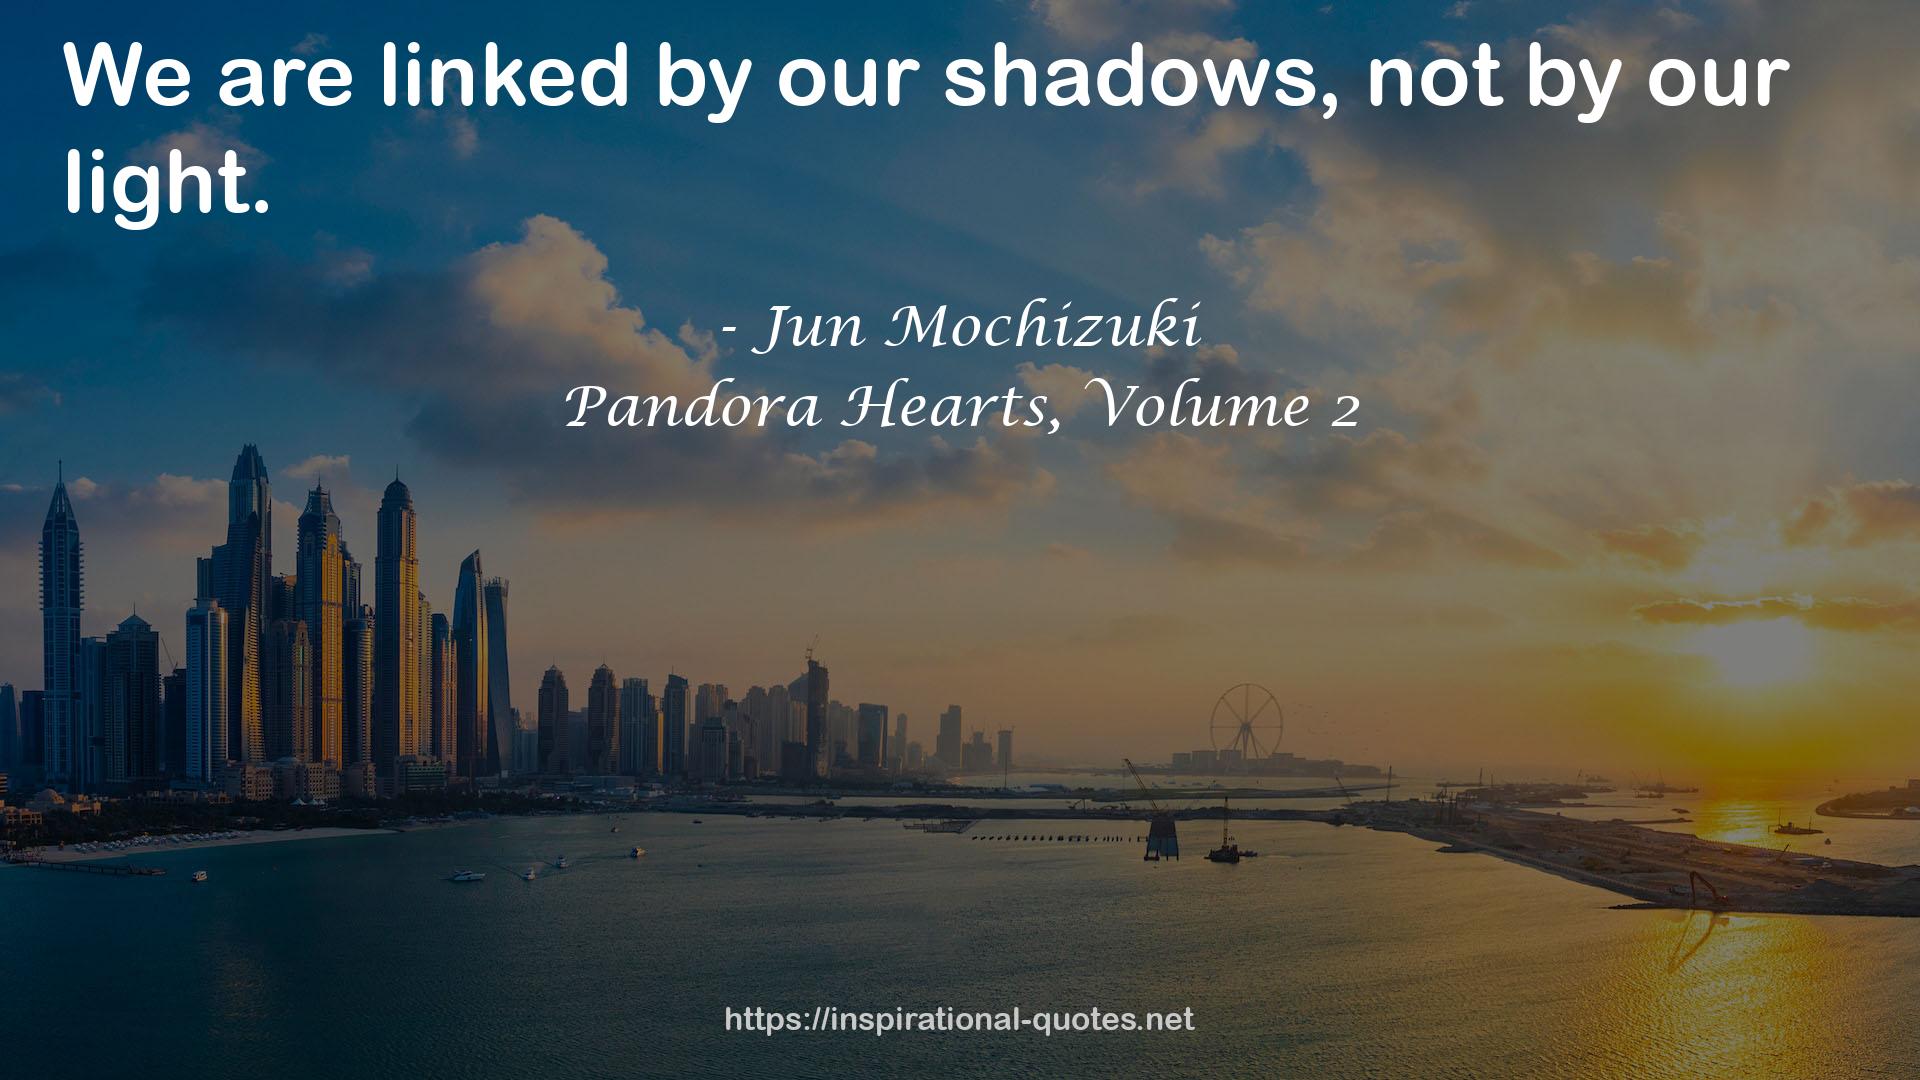 Pandora Hearts, Volume 2 QUOTES